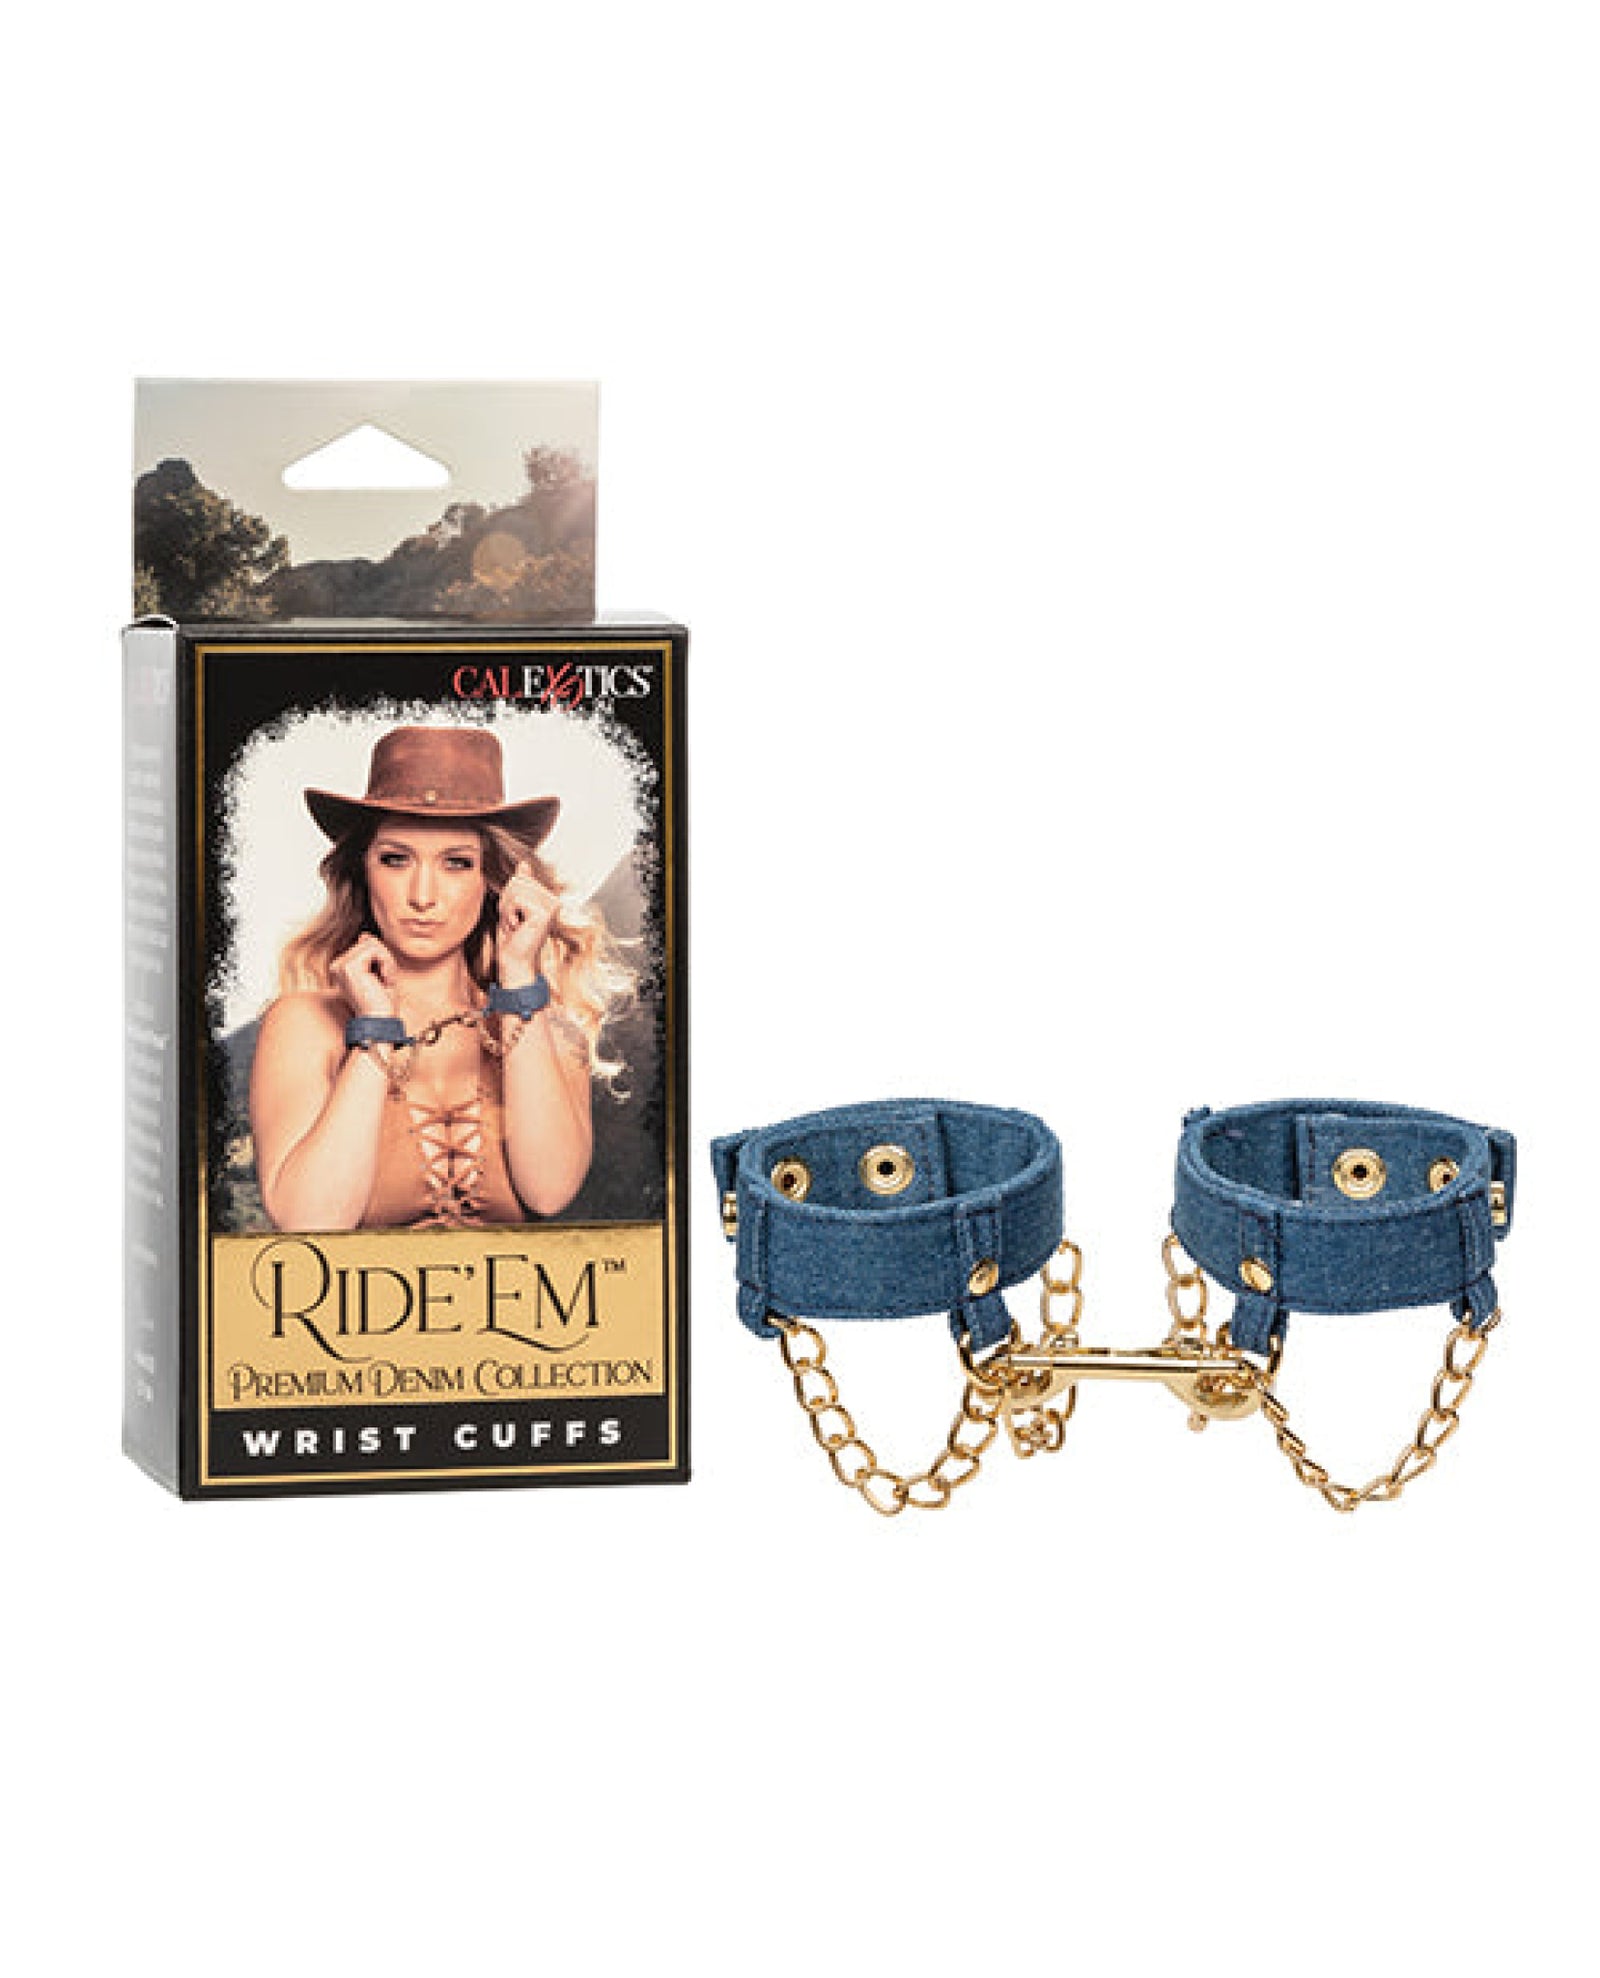 Ride 'em Premium Denim Collection Wrist Cuffs California Exotic Novelties